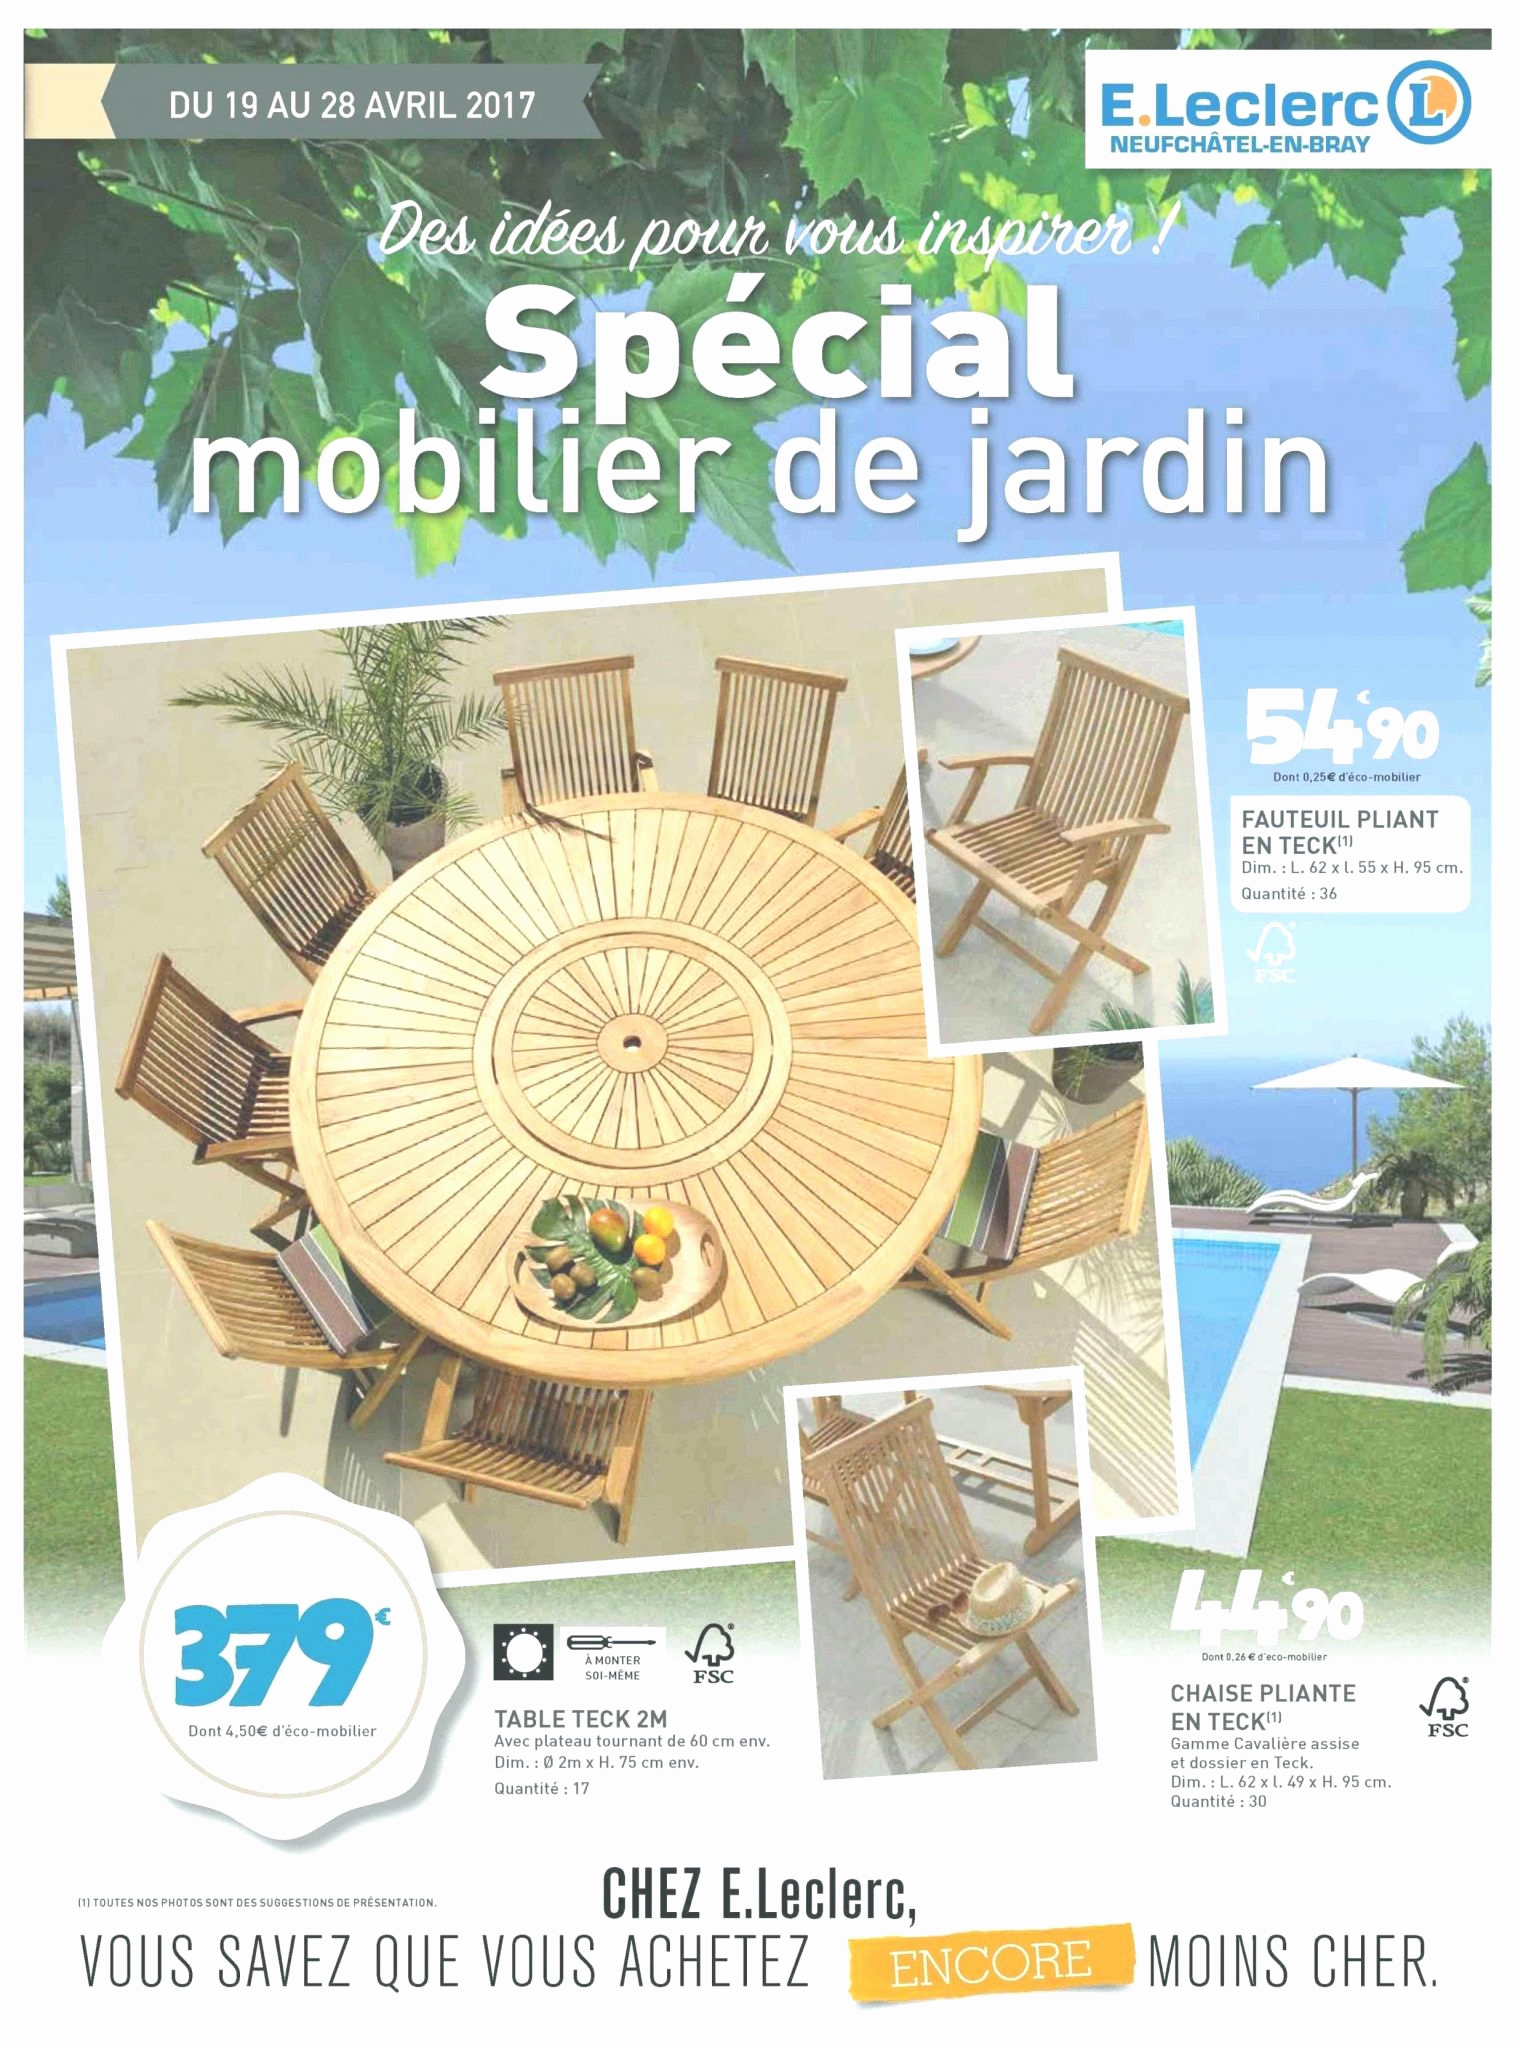 Salon De Jardin En Aluminium Pas Cher Beau Salon De Jardin Leclerc Catalogue 2017 Le Meilleur De Table